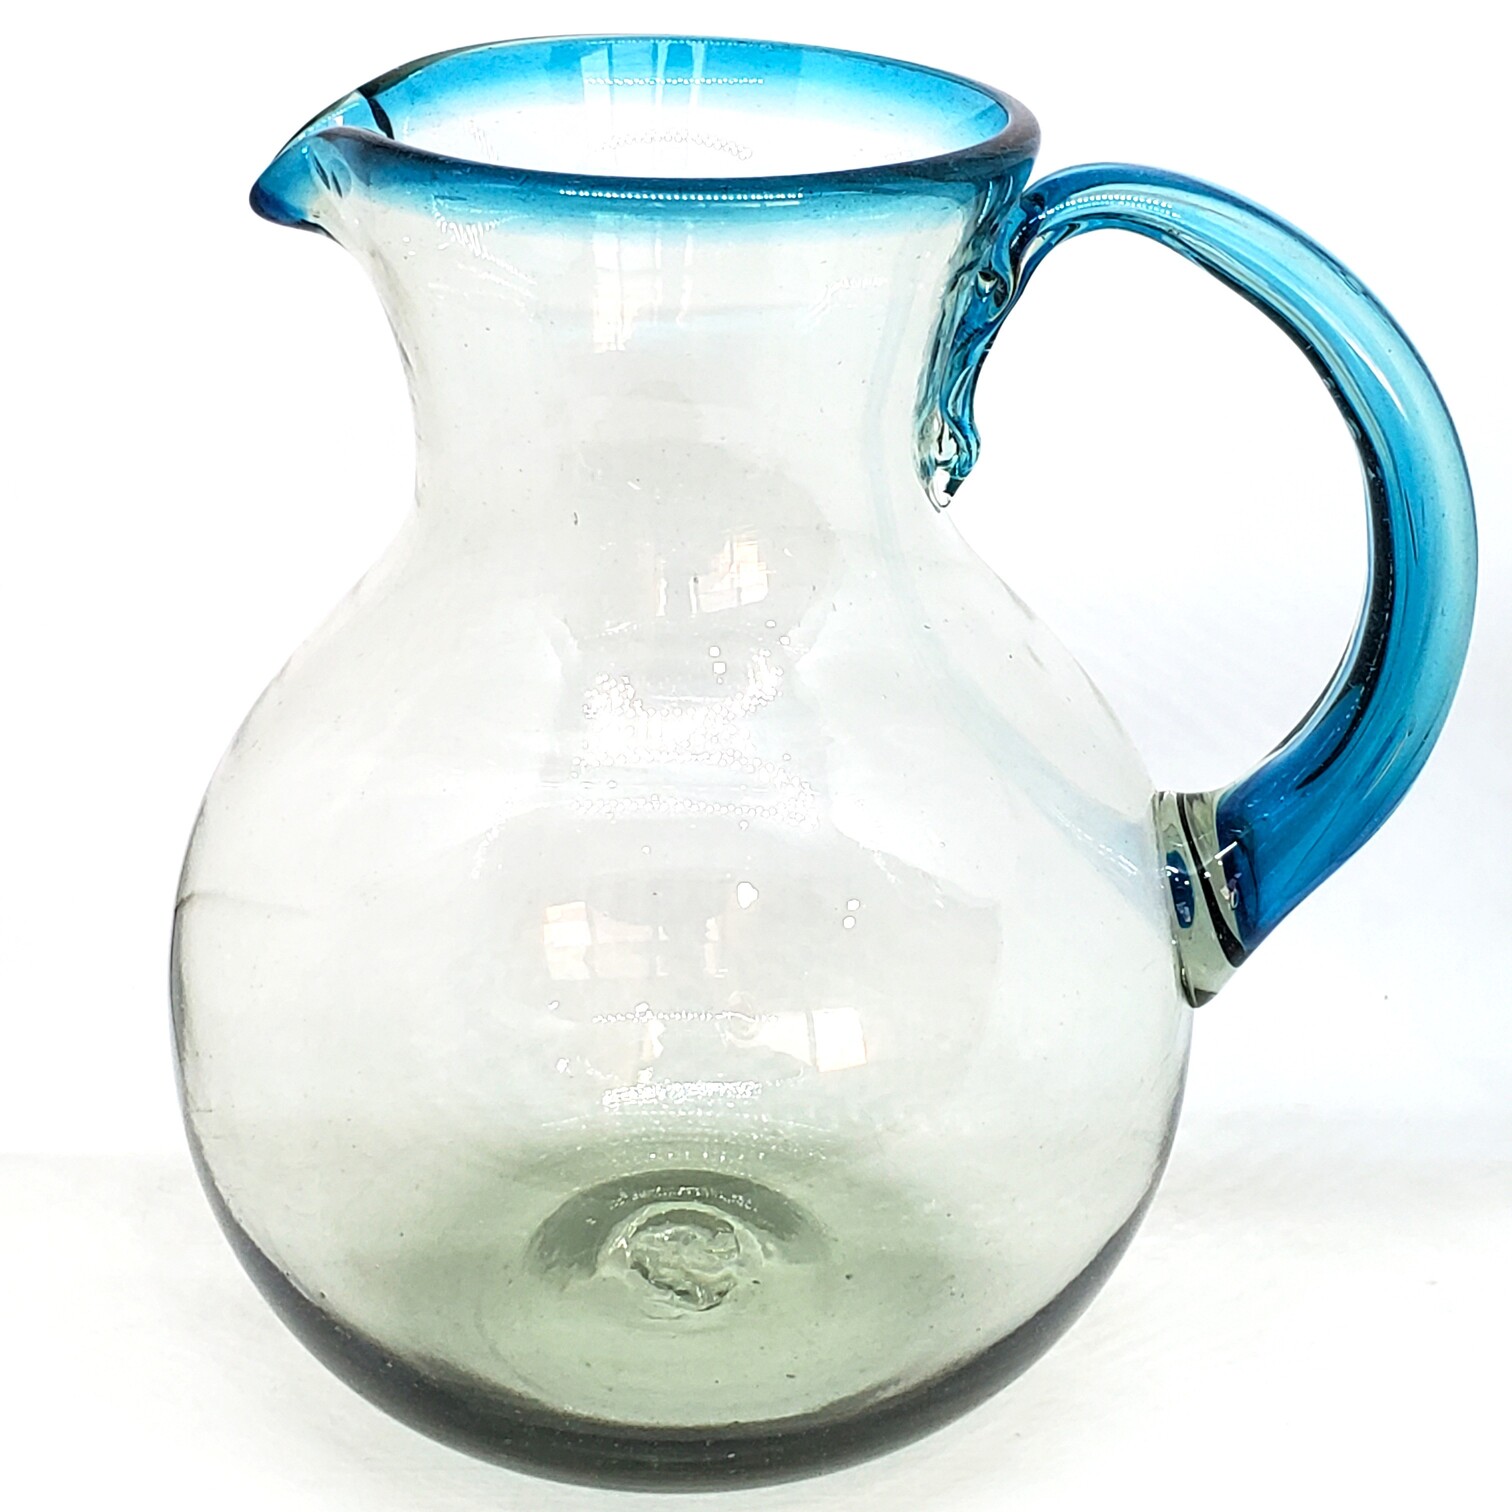 Sale Items / Aqua Blue Rim 120 oz Large Bola Pitcher / This modern pitcher is decorated with an aqua blue rim.